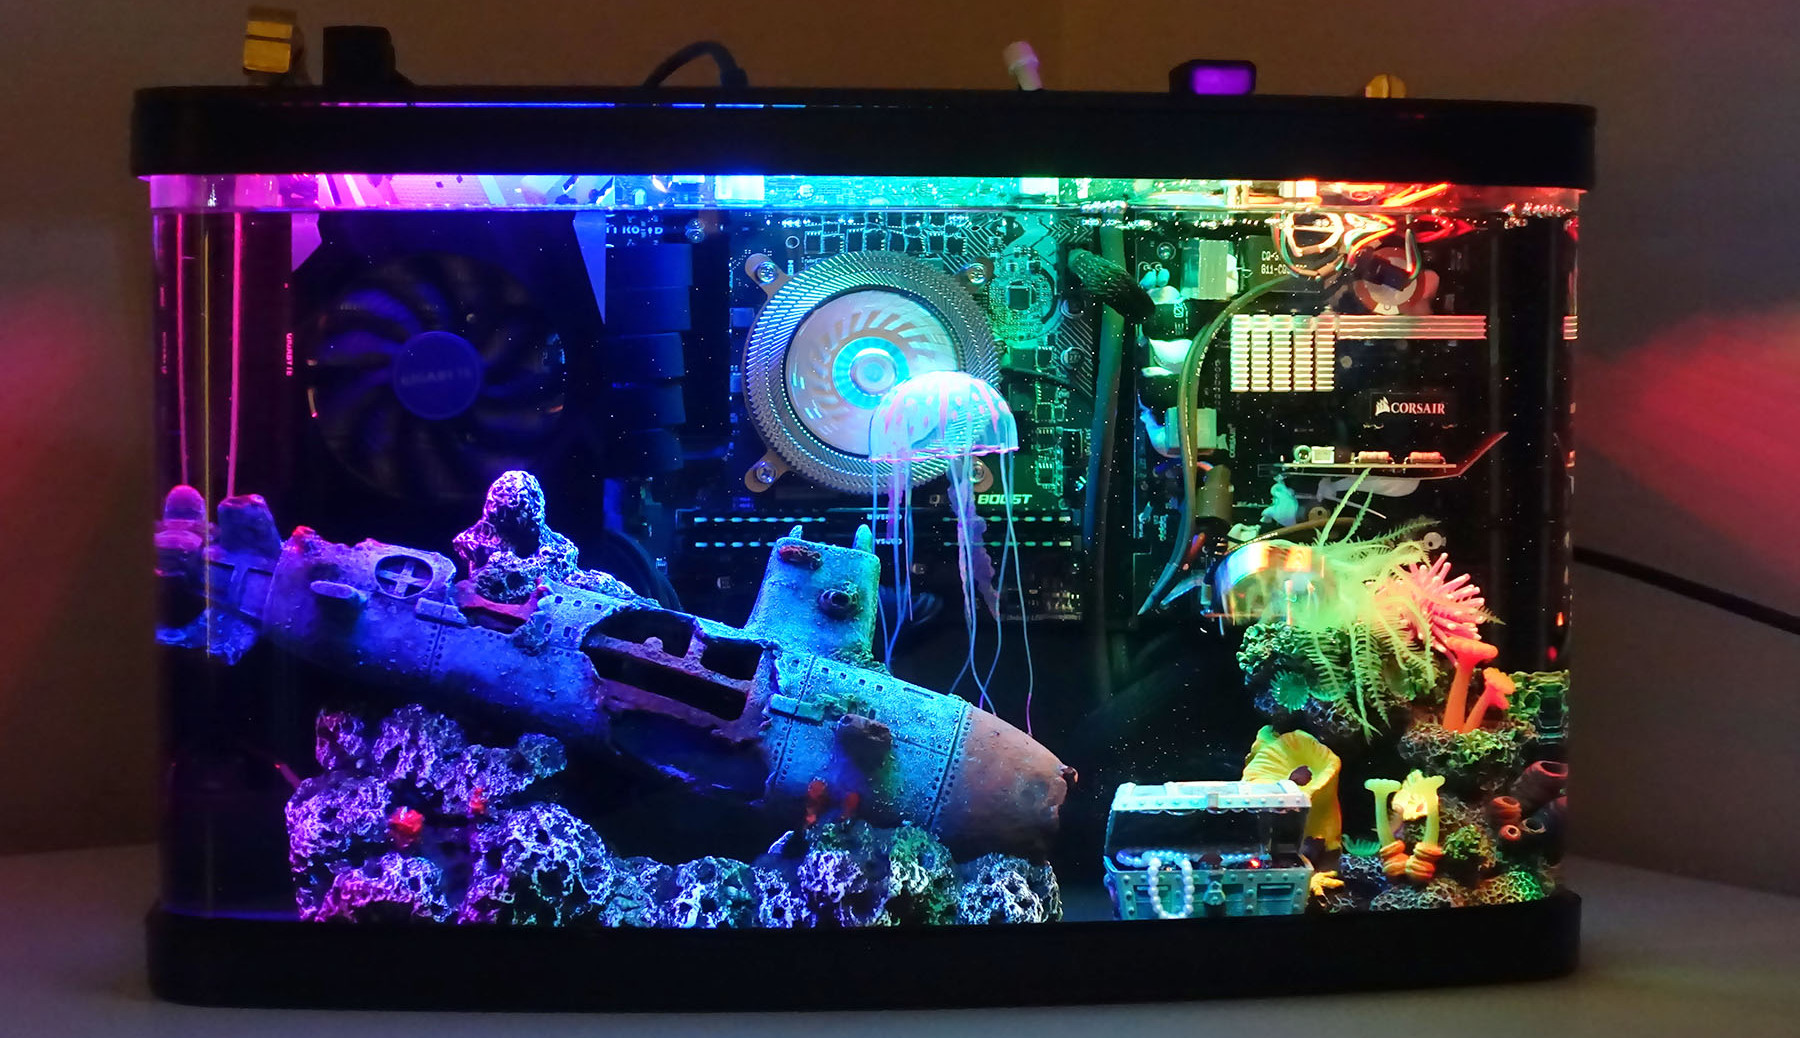 fishy-computer-case-featured.jpg